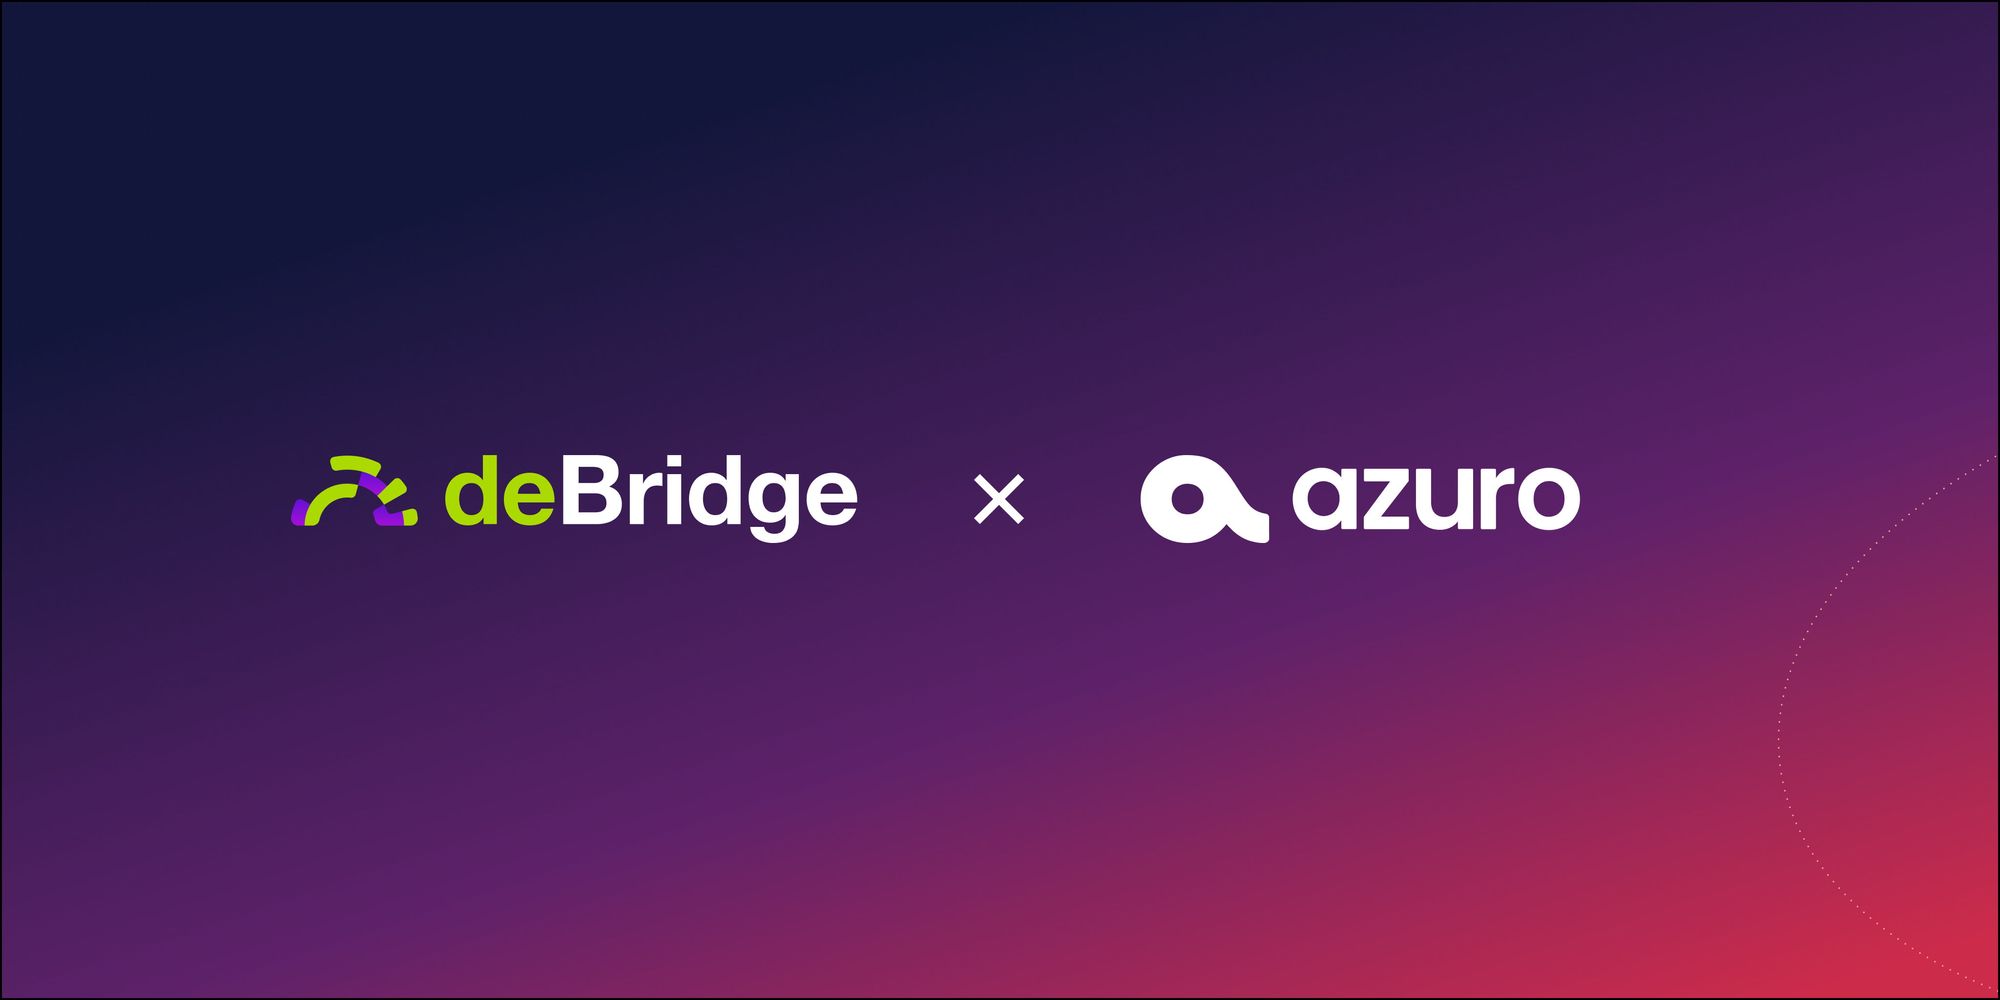 Azuro Teams Up with deBridge to Bring High-Speed Bridging to Azuro dApps